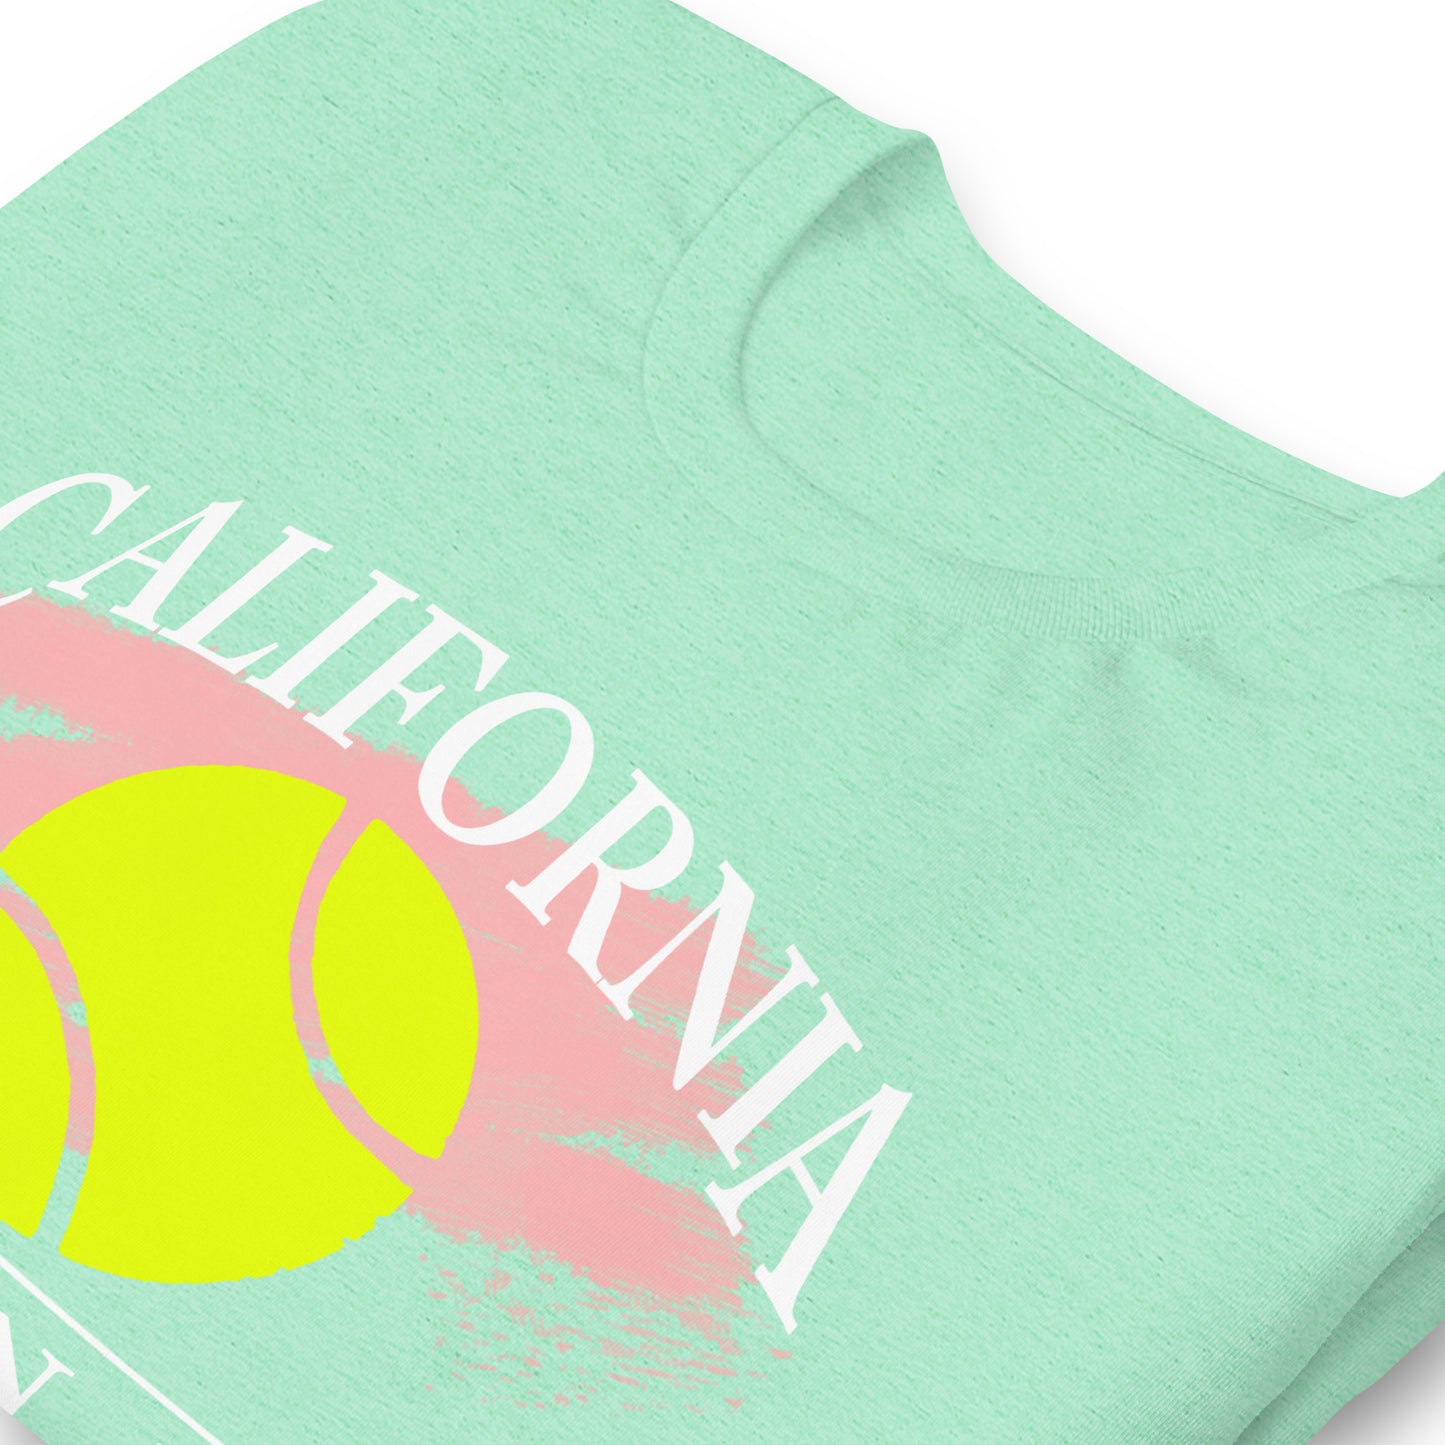 California Tennis unisex shirt